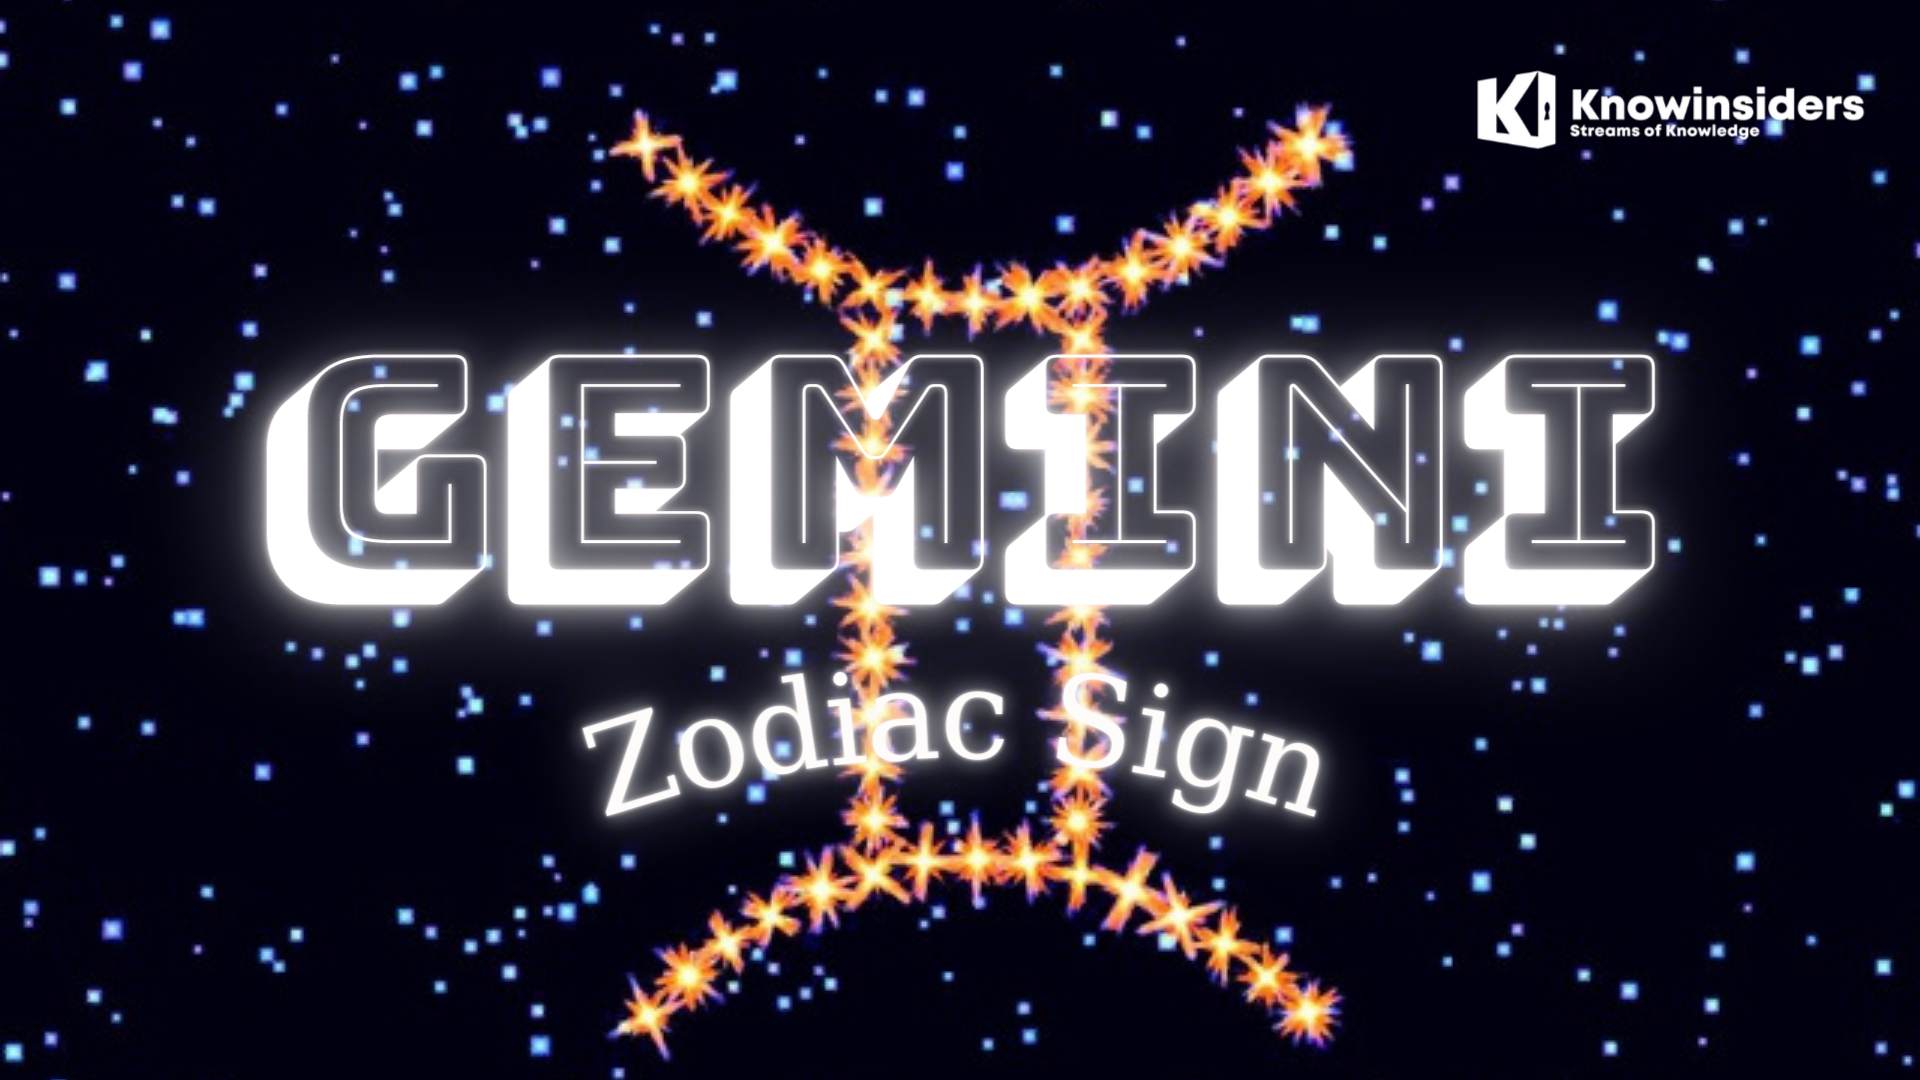 Top 5 Flirtiest Zodiac Signs According To Astrology